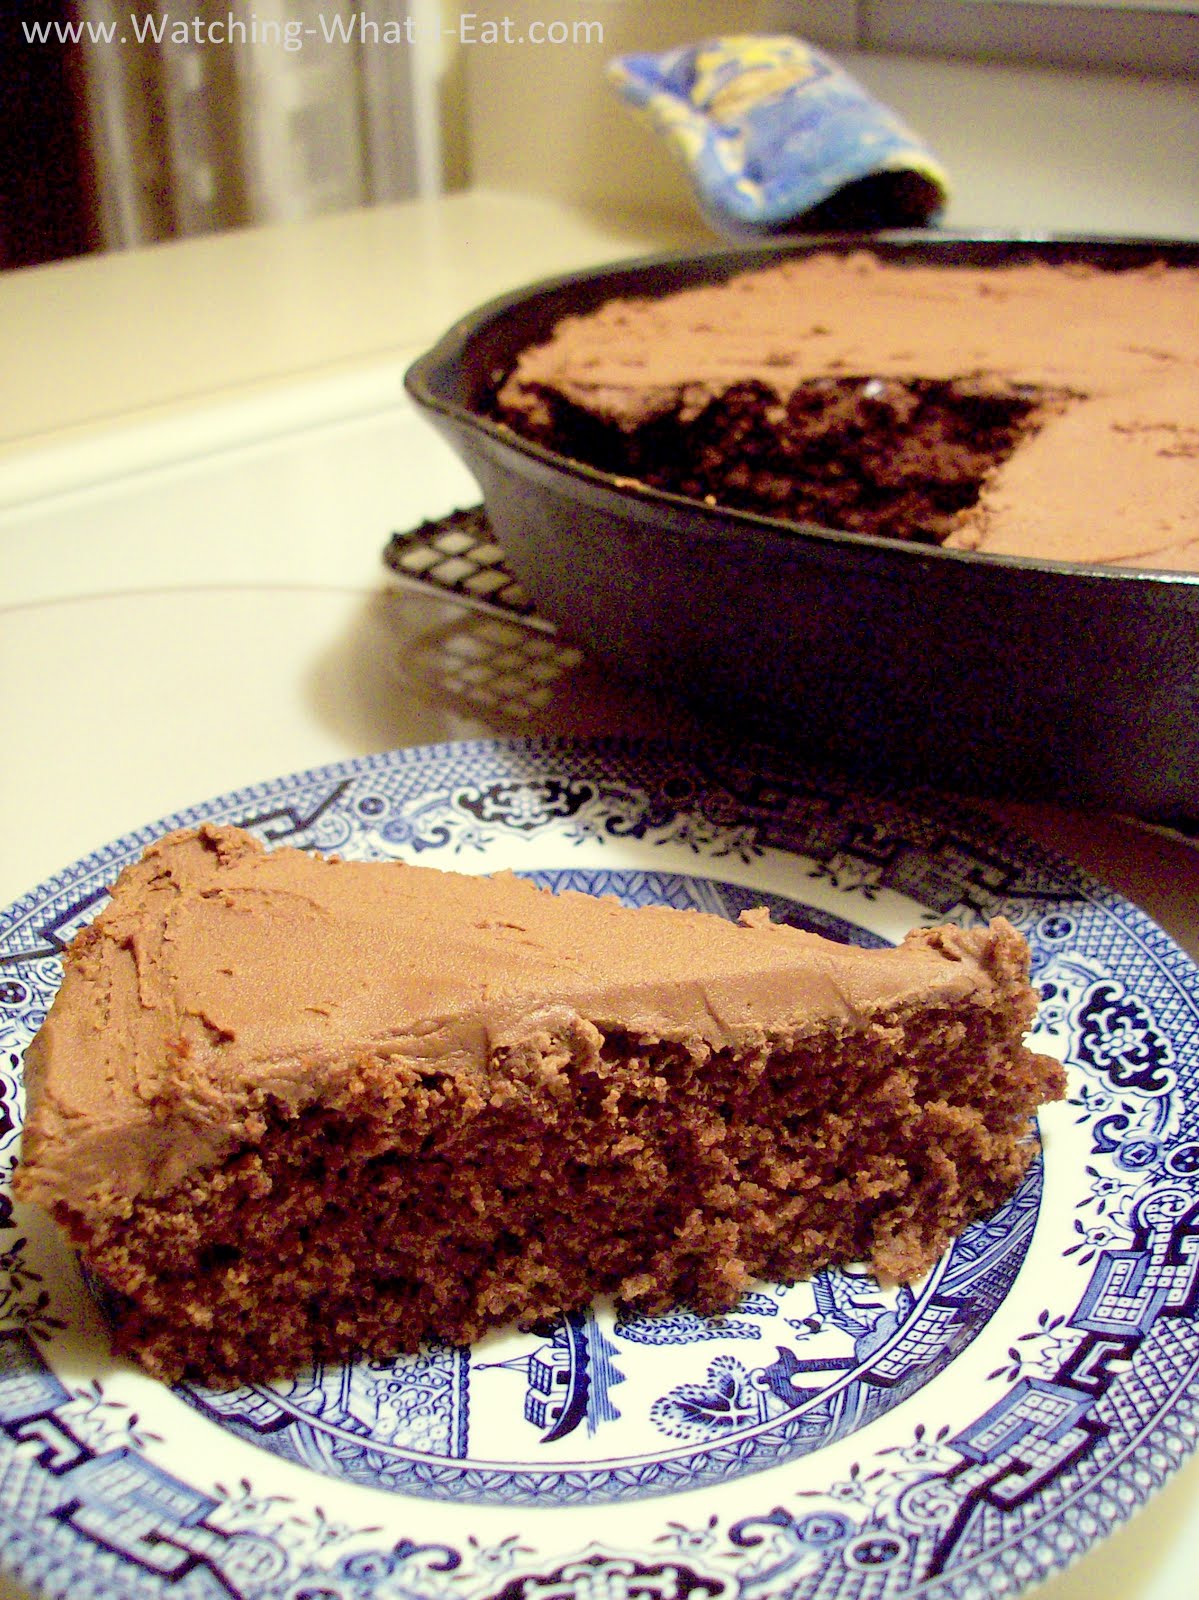 Chocolate Skillet Cake aka 'Poor Man's Cake' or 'Wacky Cake'